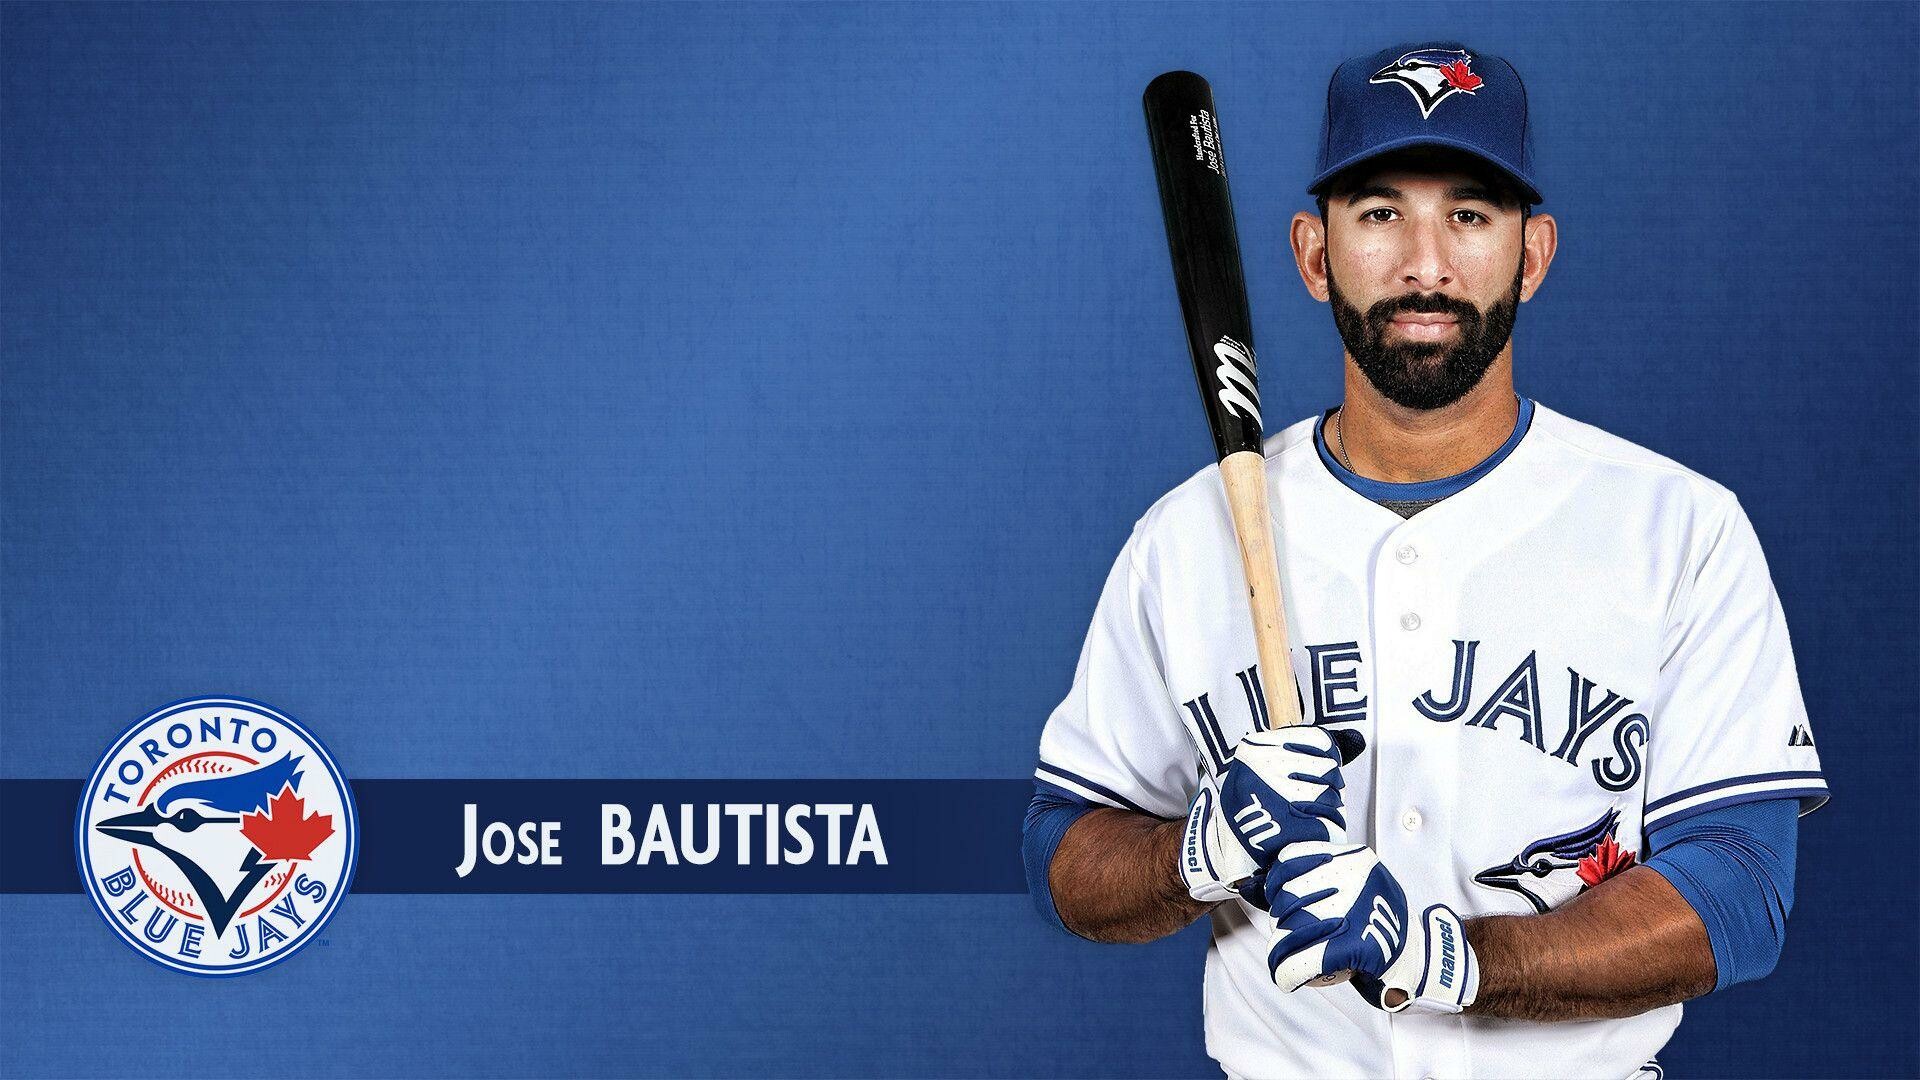 Jose Bautista, 2018 wallpapers, Baseball player, Sports icon, 1920x1080 Full HD Desktop